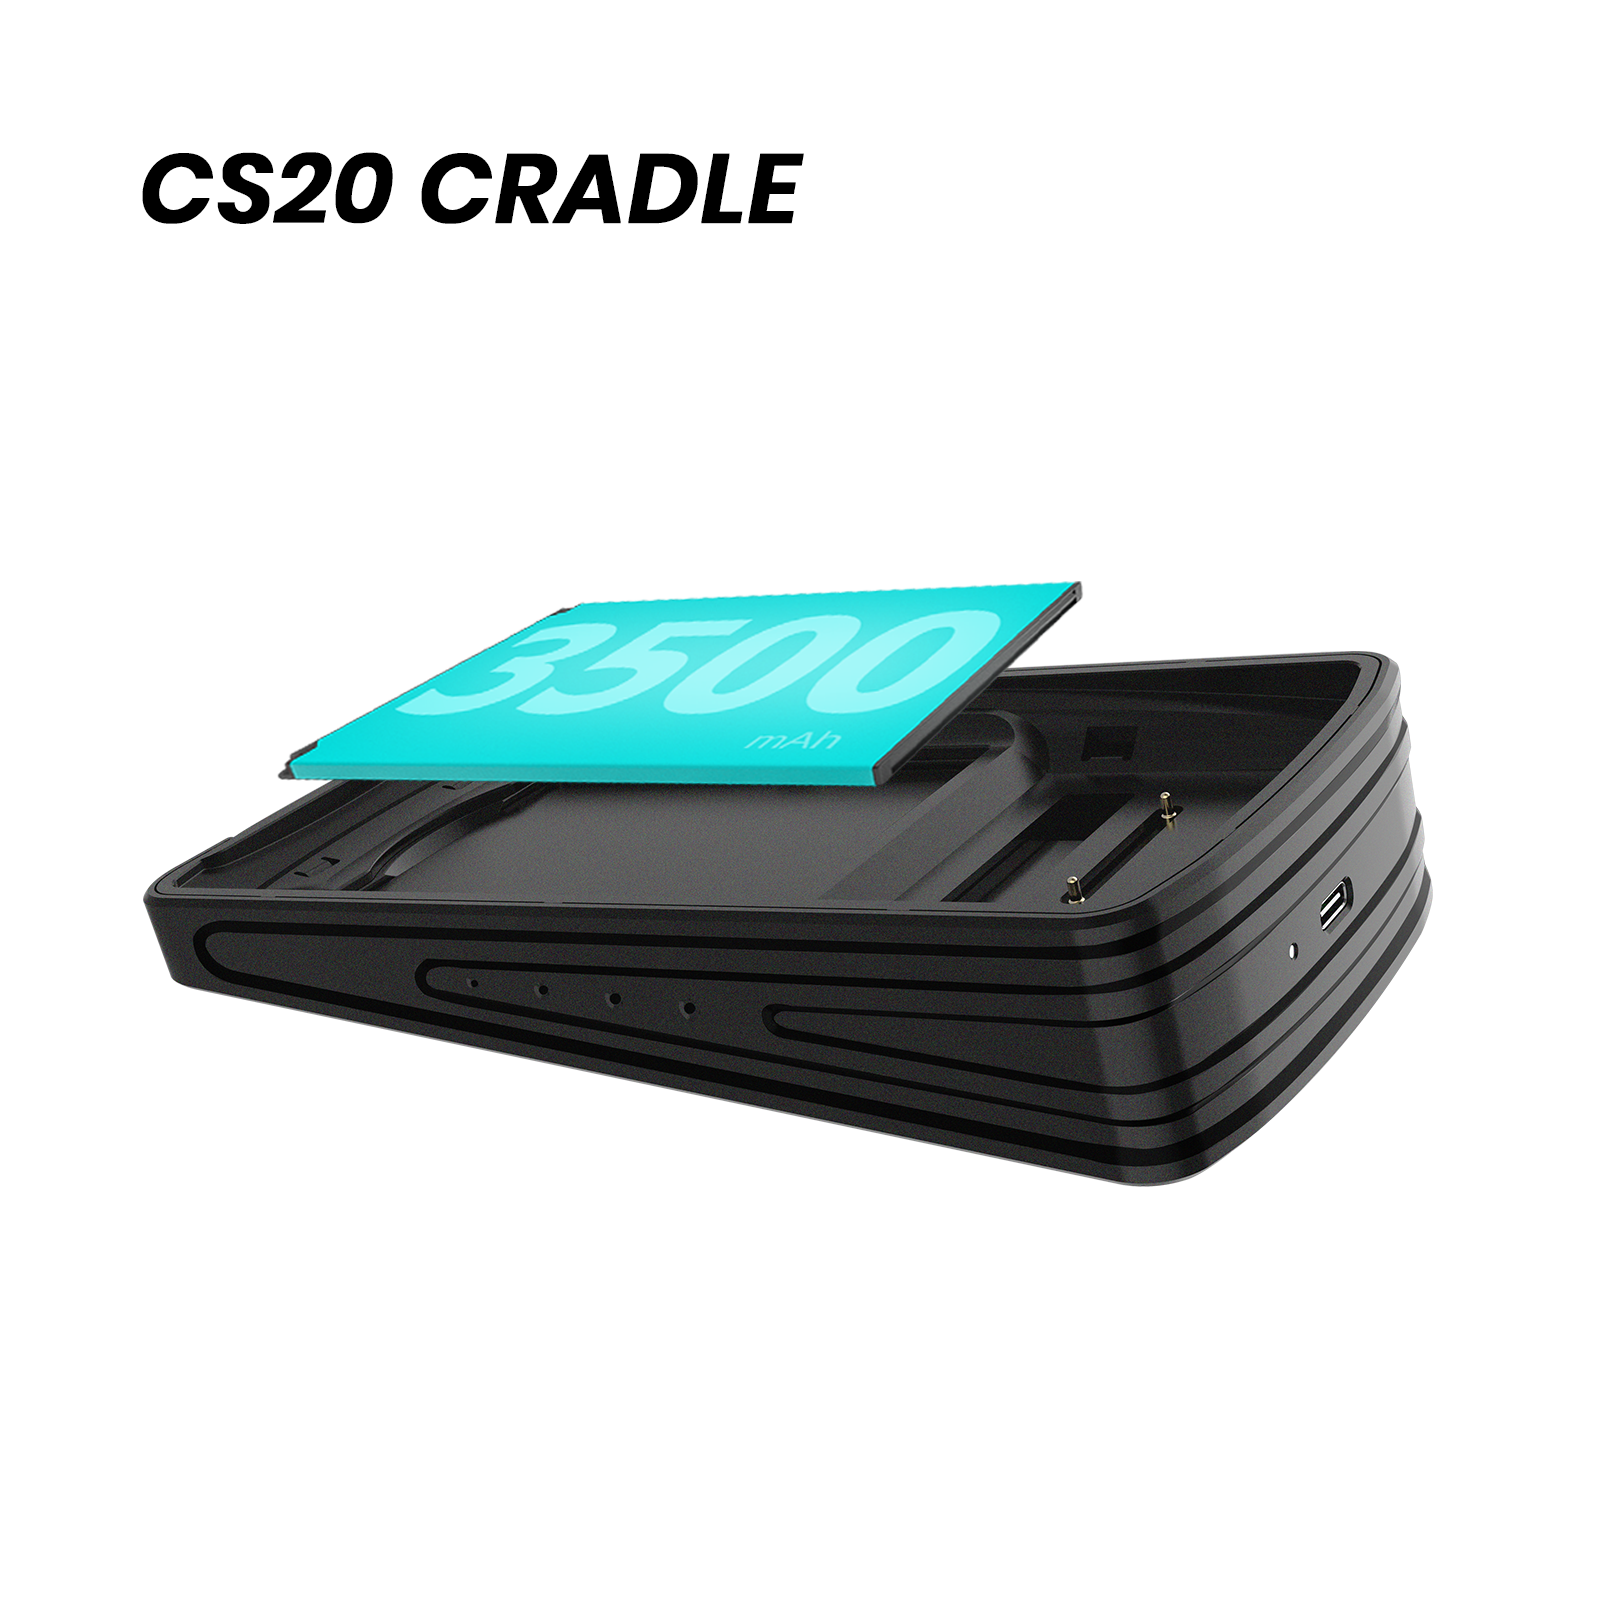 Peripherals For CS20|Smart Pos Charger|POS Protector|Ciontek